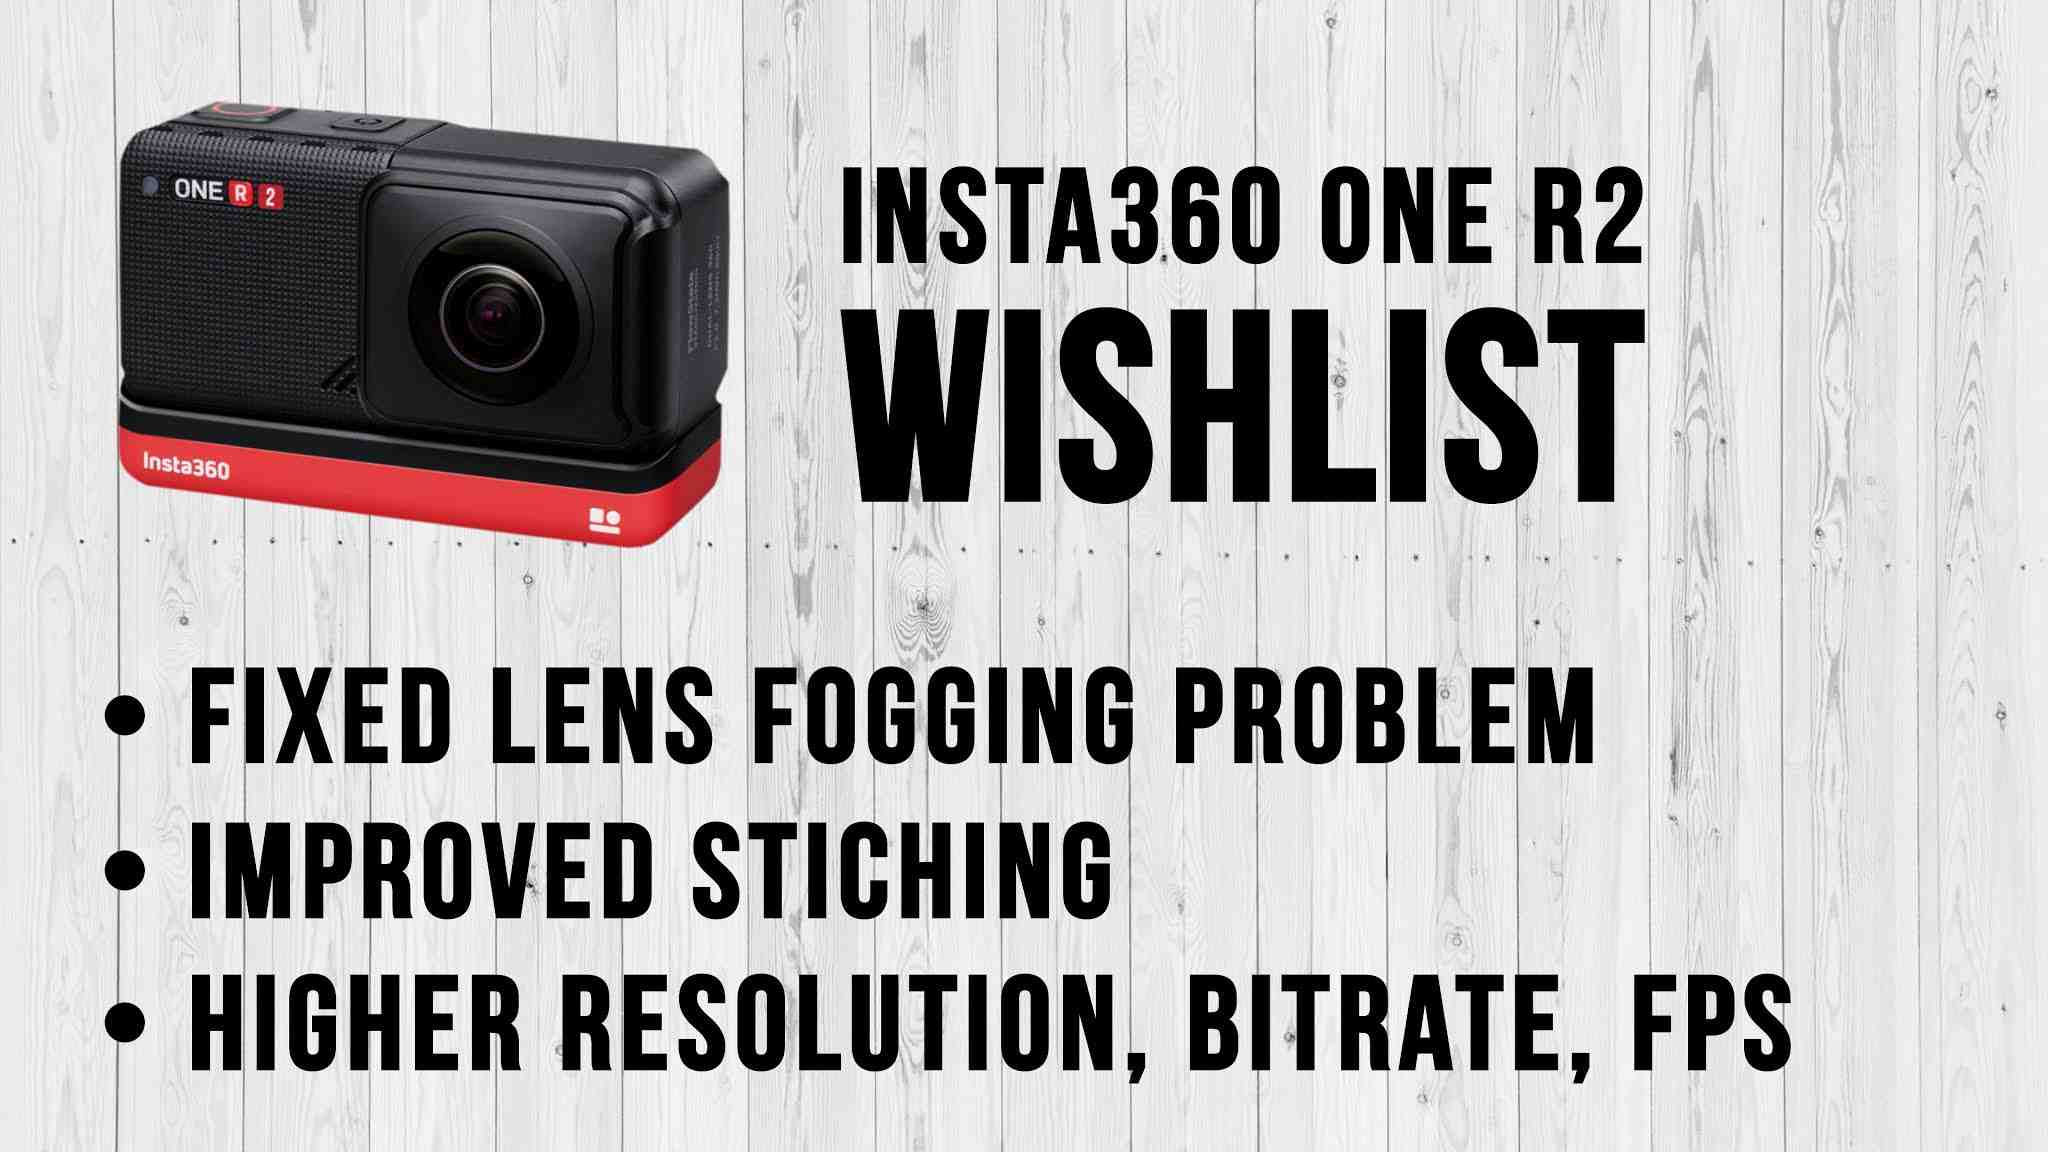 Will DJI make a 360 camera?